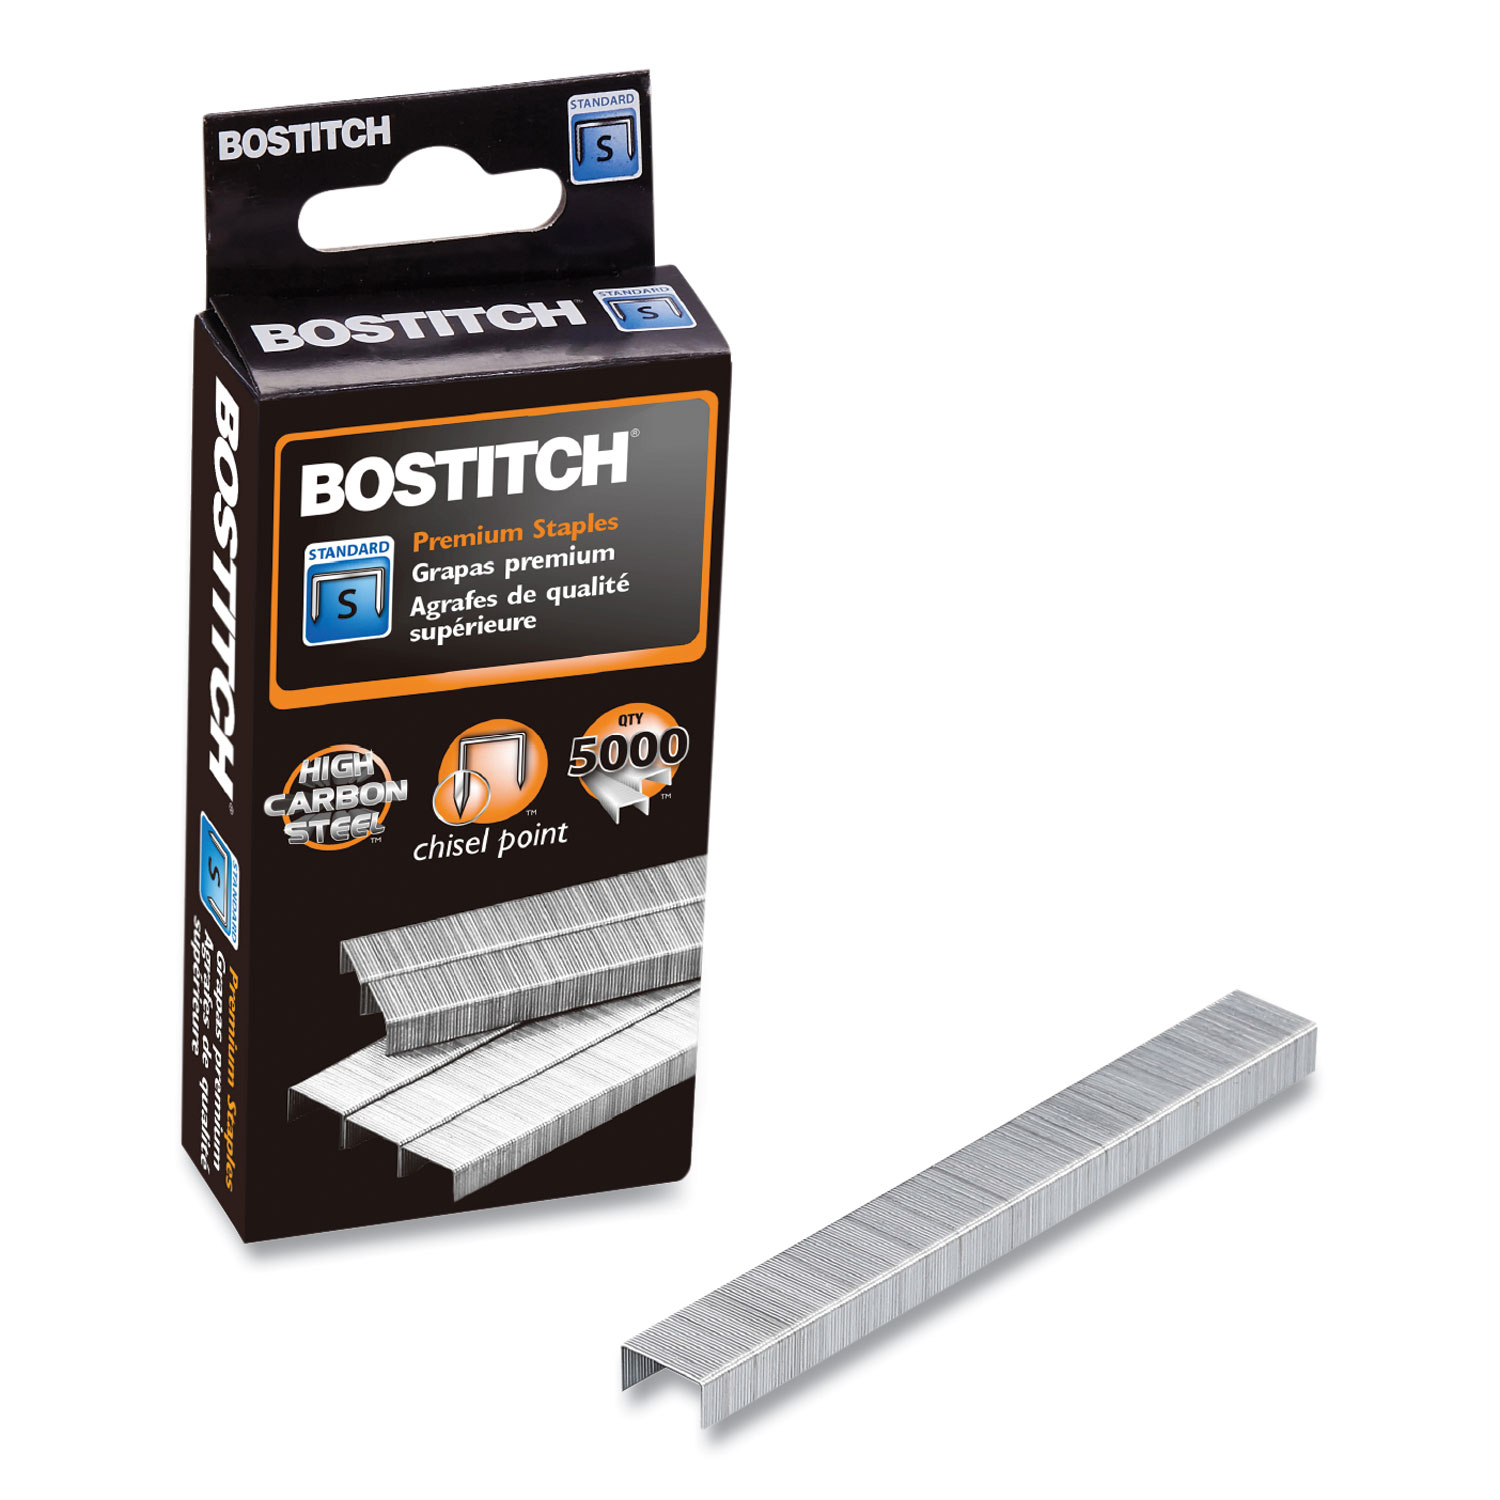 Bostitch Metal No-Jam Booklet Stapler, 20 Sheet Capacity, Black